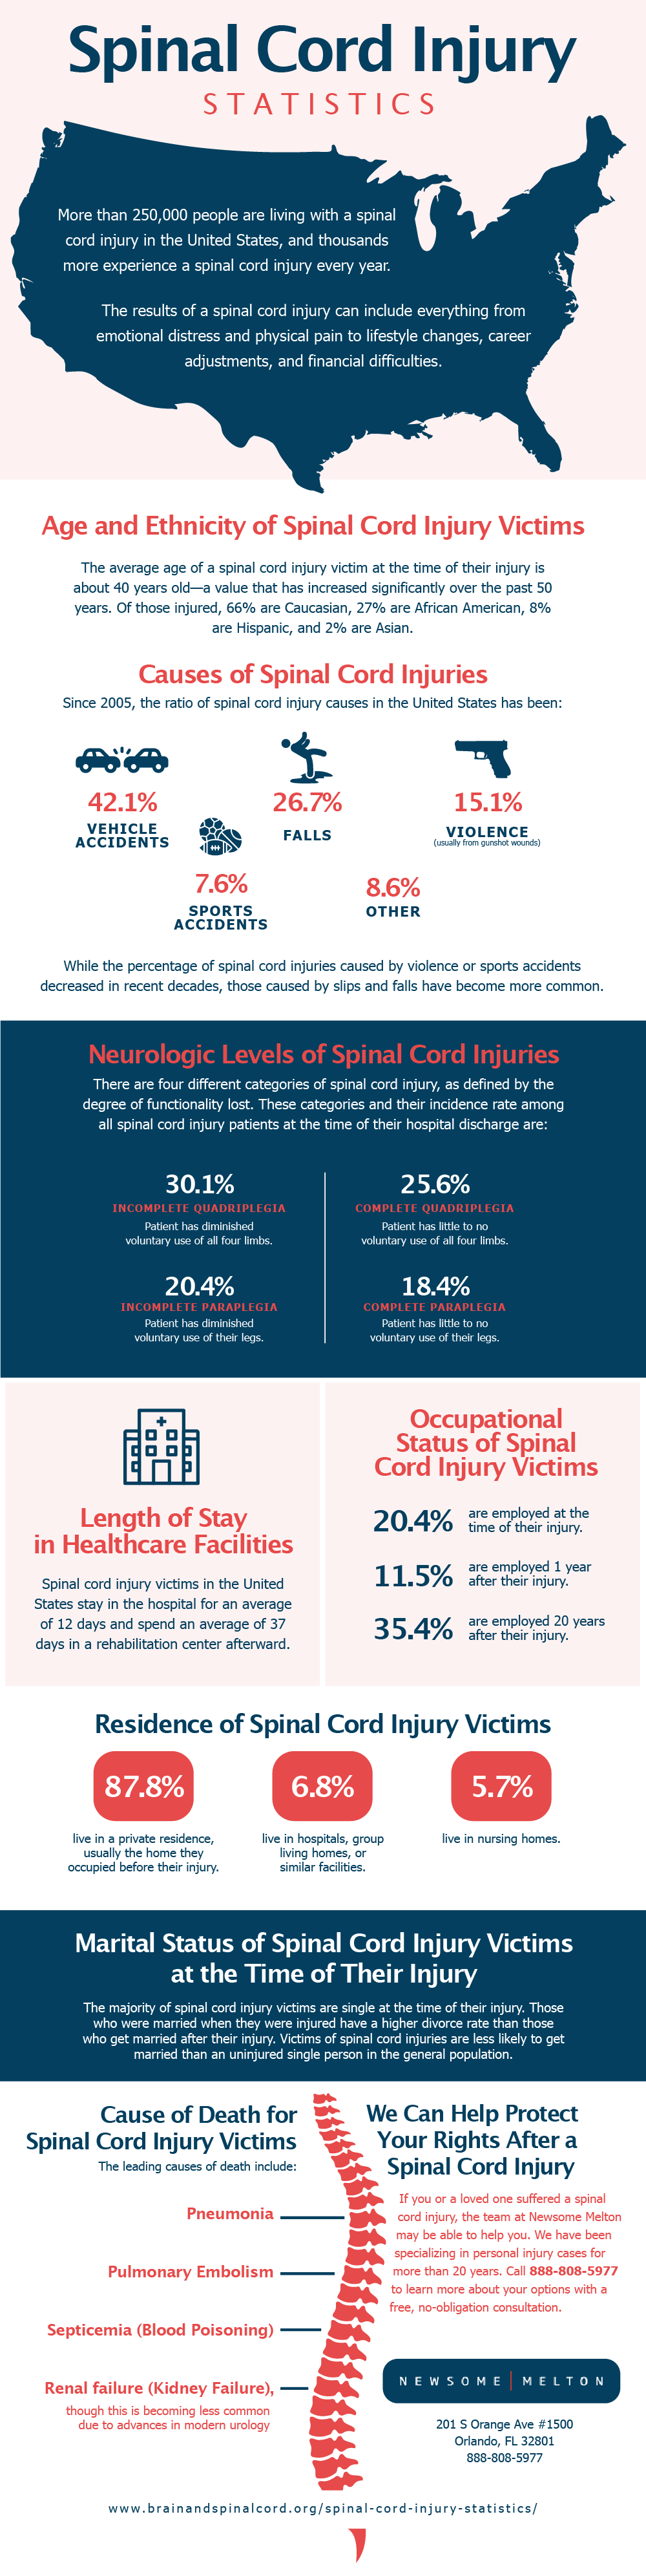  Spinal Cord Injury Statistics